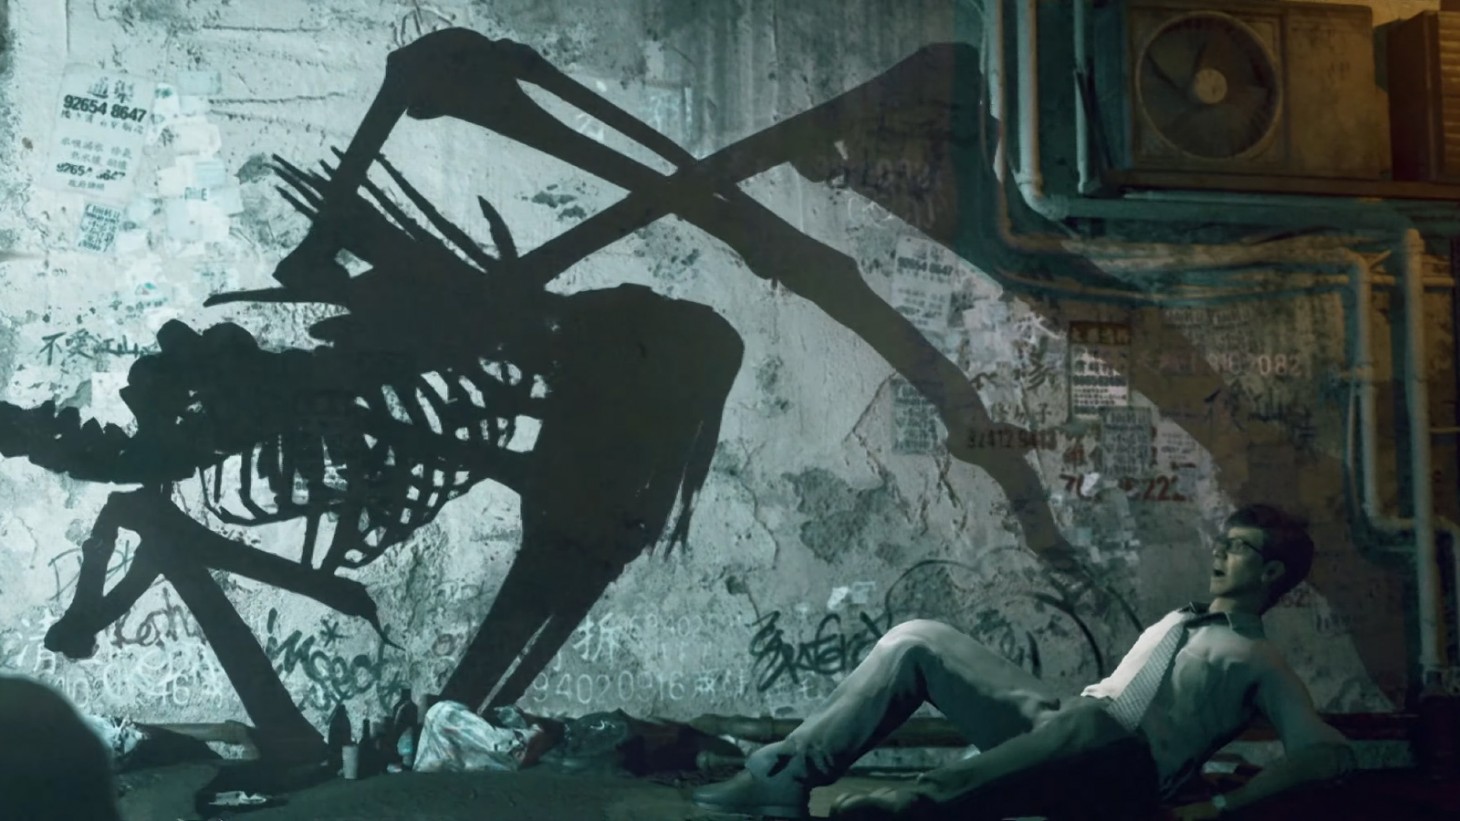 Reveal Trailer For New Game SLITTERHEAD From Silent Hill Director